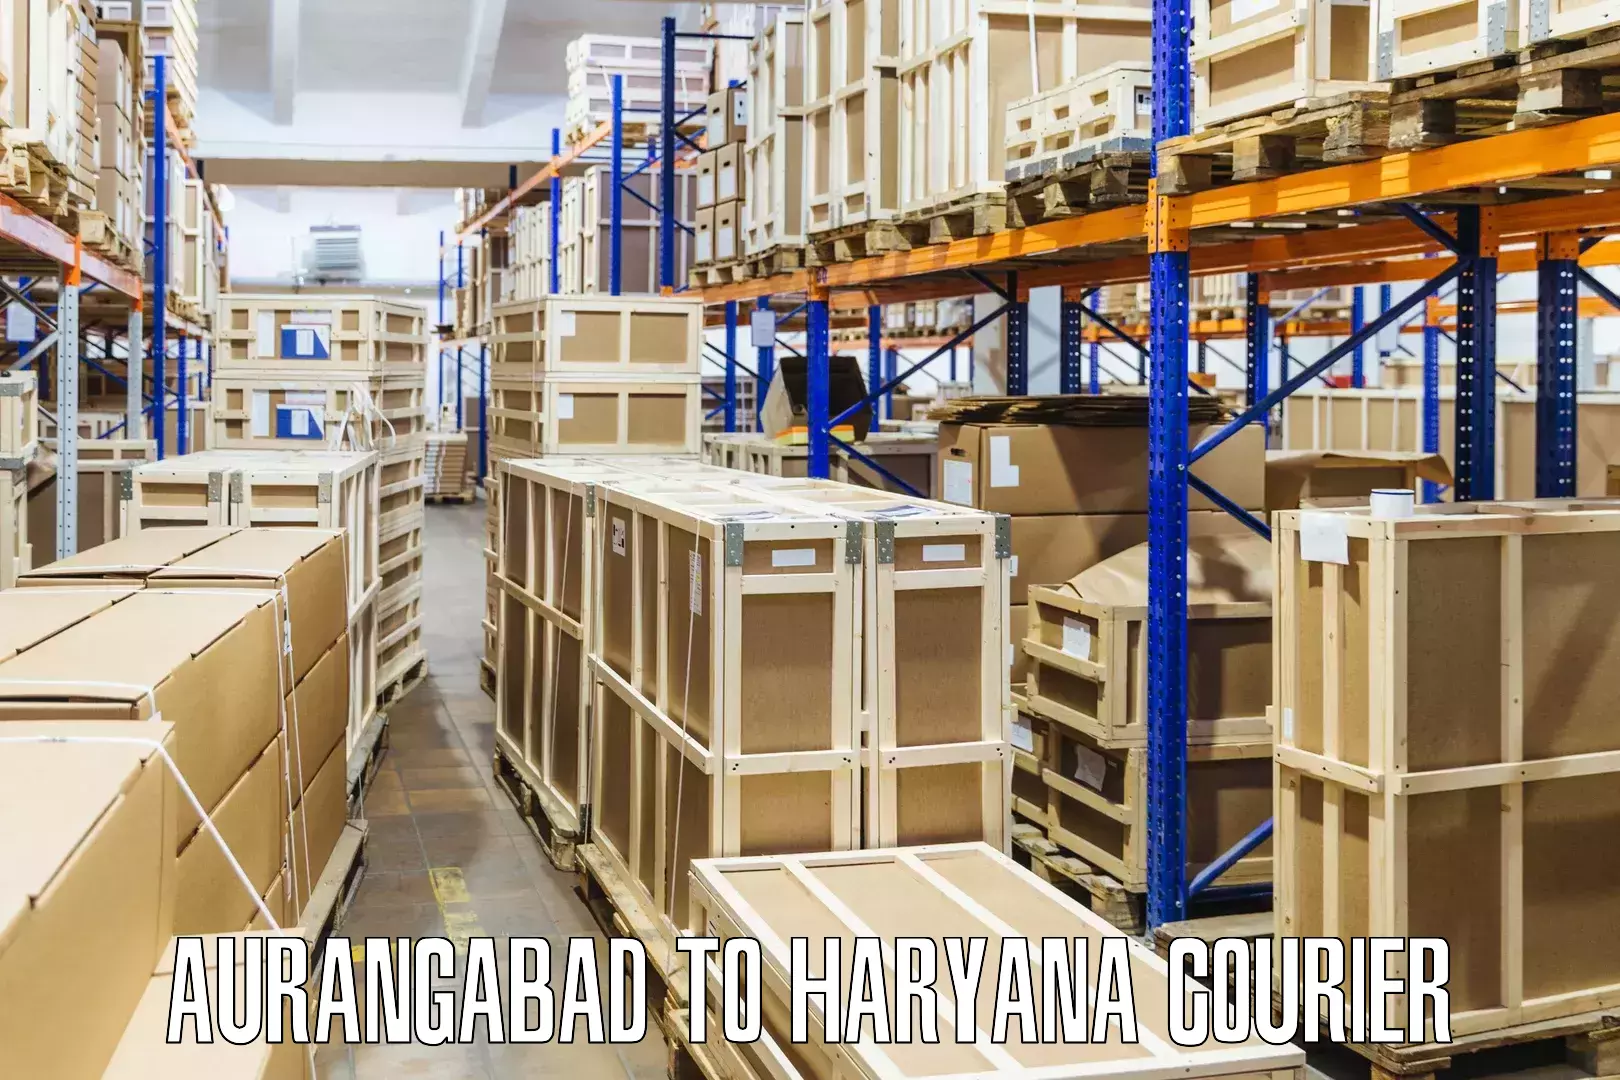 Courier service efficiency Aurangabad to Barwala